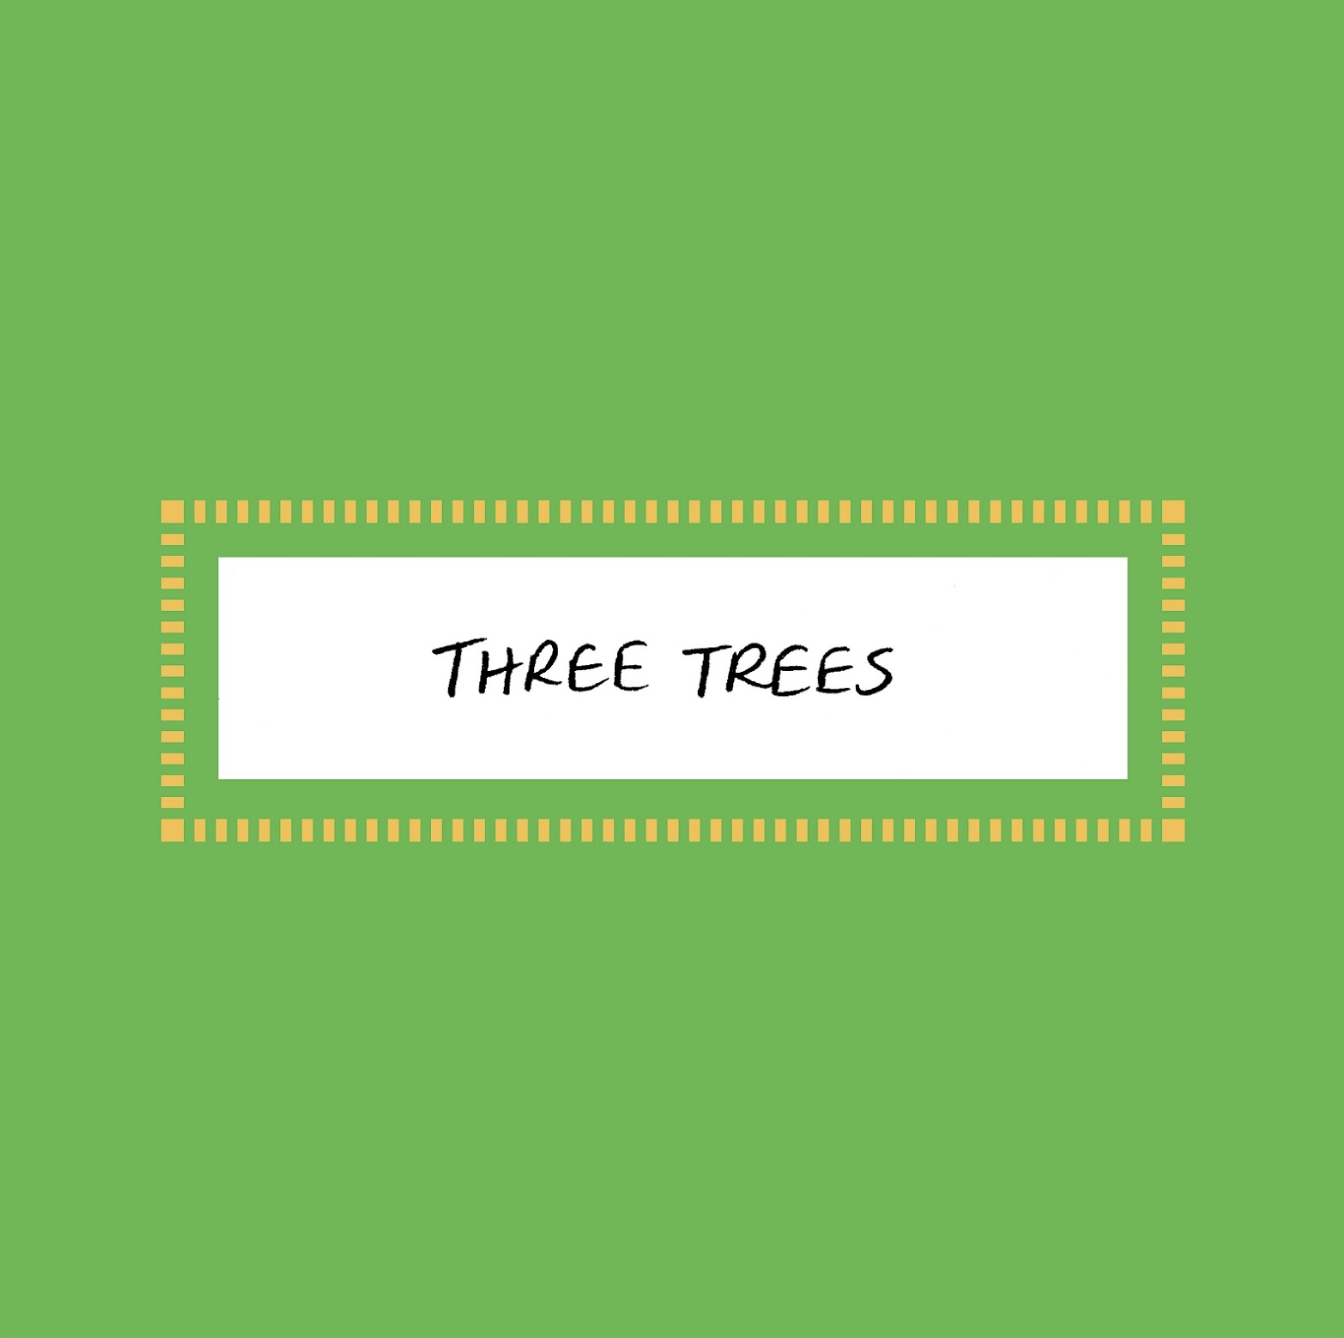 Three Trees by Tiffany Troy